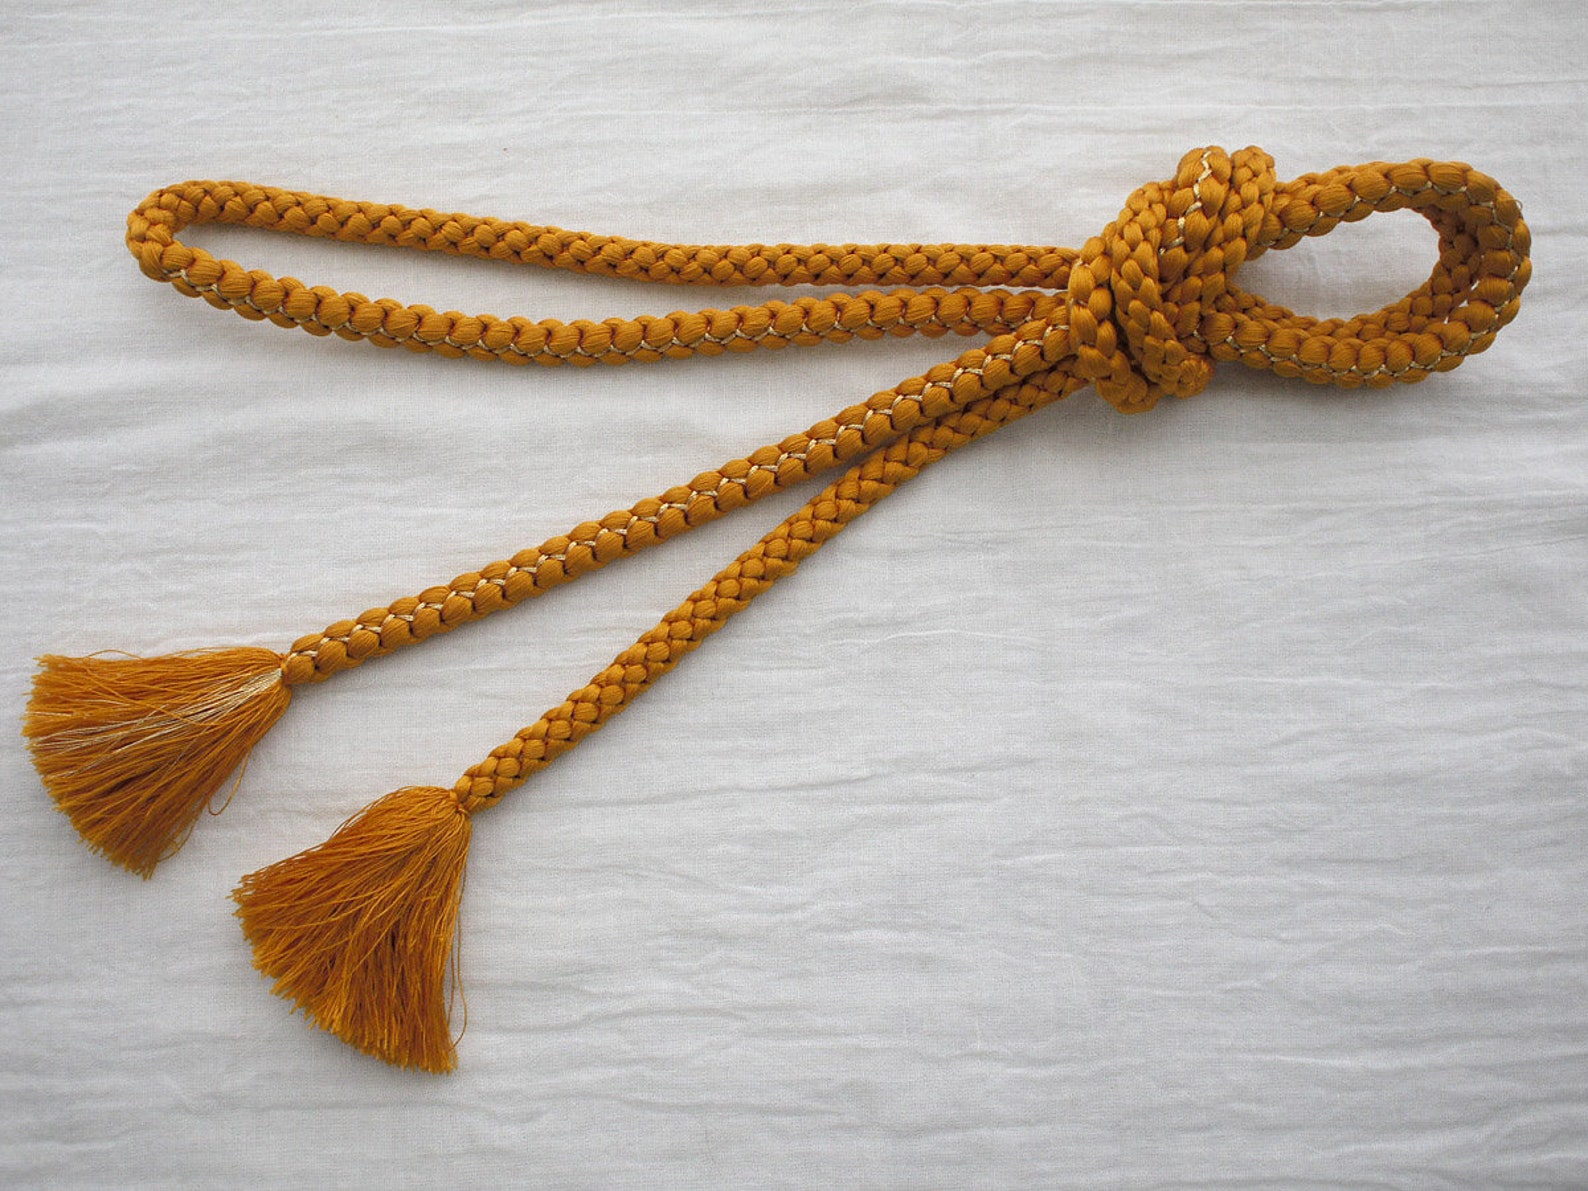 Secondmand obijime Japanese kimono cord cord for obi silk | Etsy